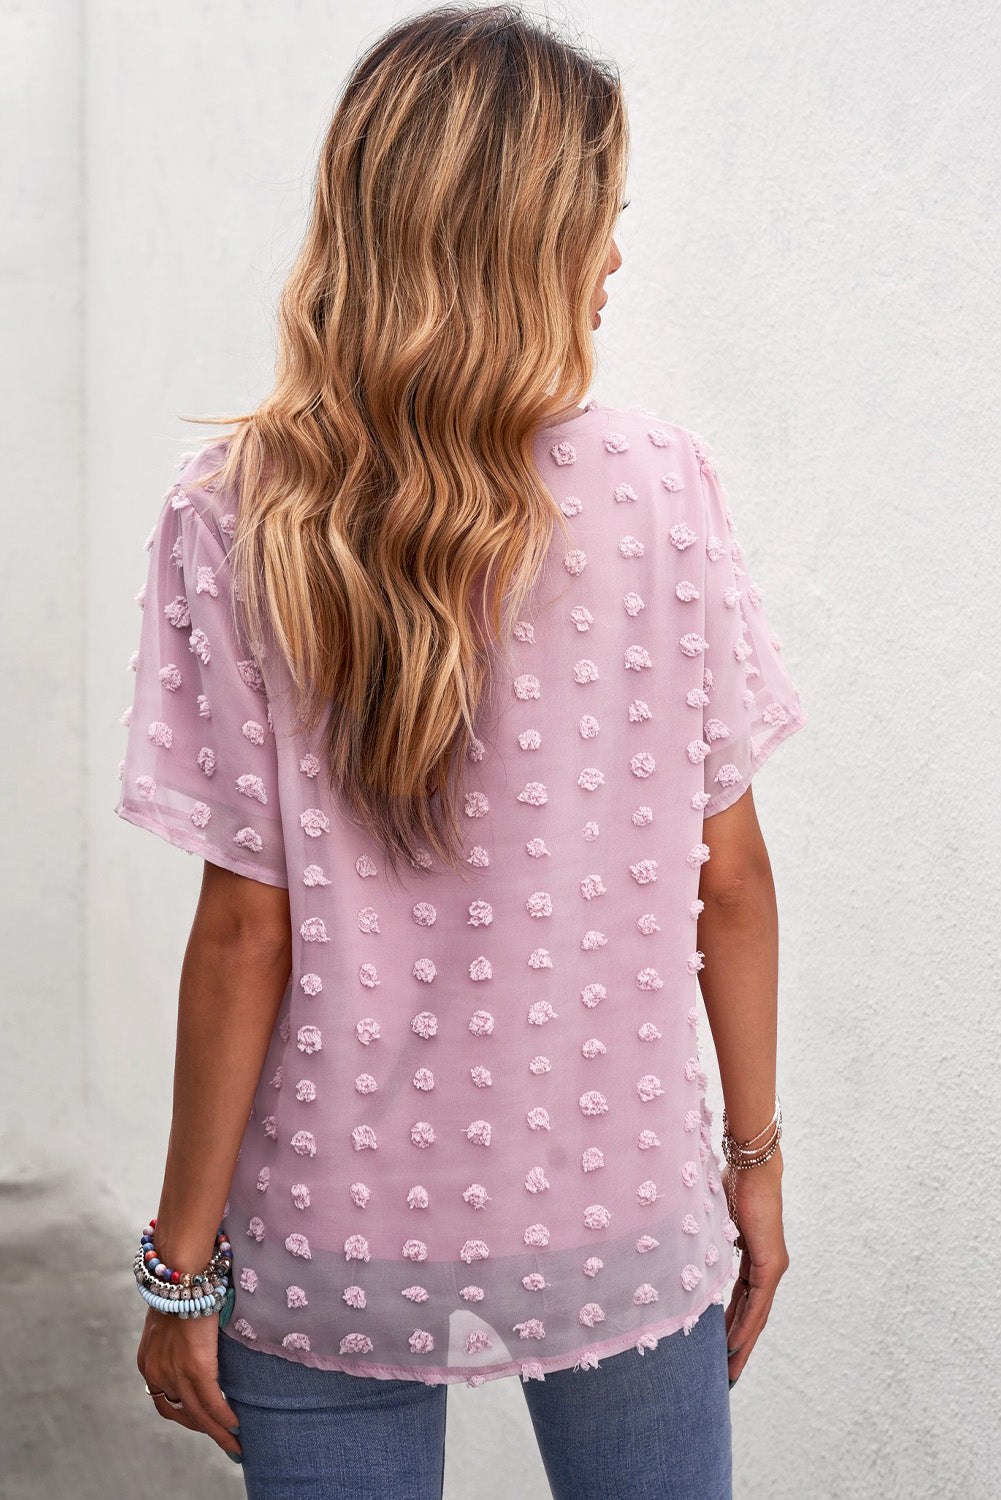 Swiss Dot Round Neck Blouse - 6 colors - women's blouse at TFC&H Co.